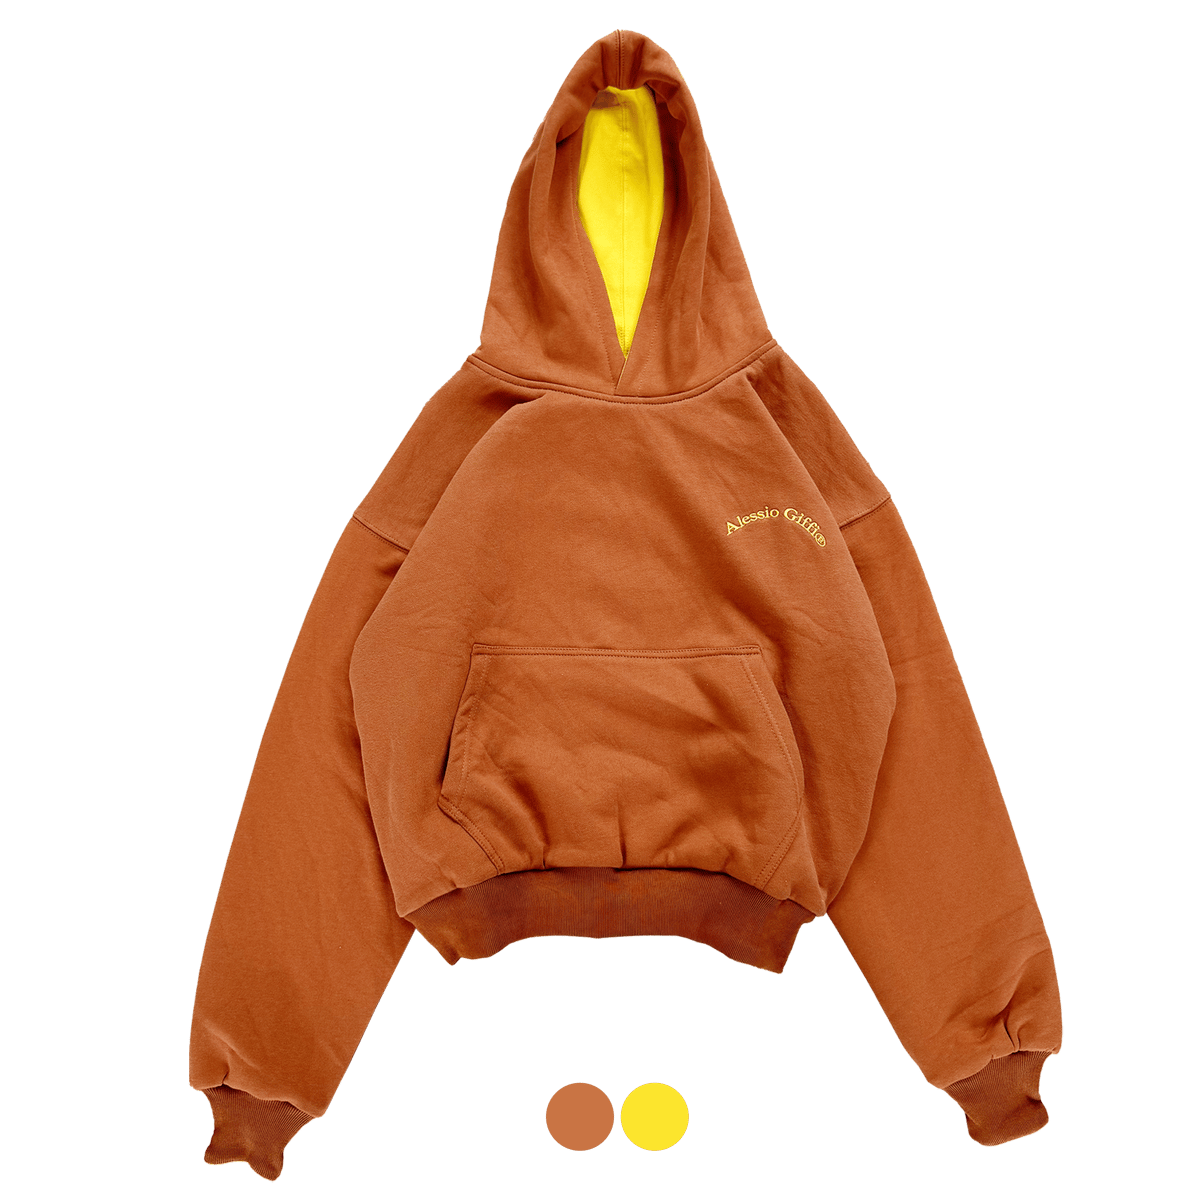 Image of “Fall” (23) in love - rusty orange/ scraper yellow perfect hoodie